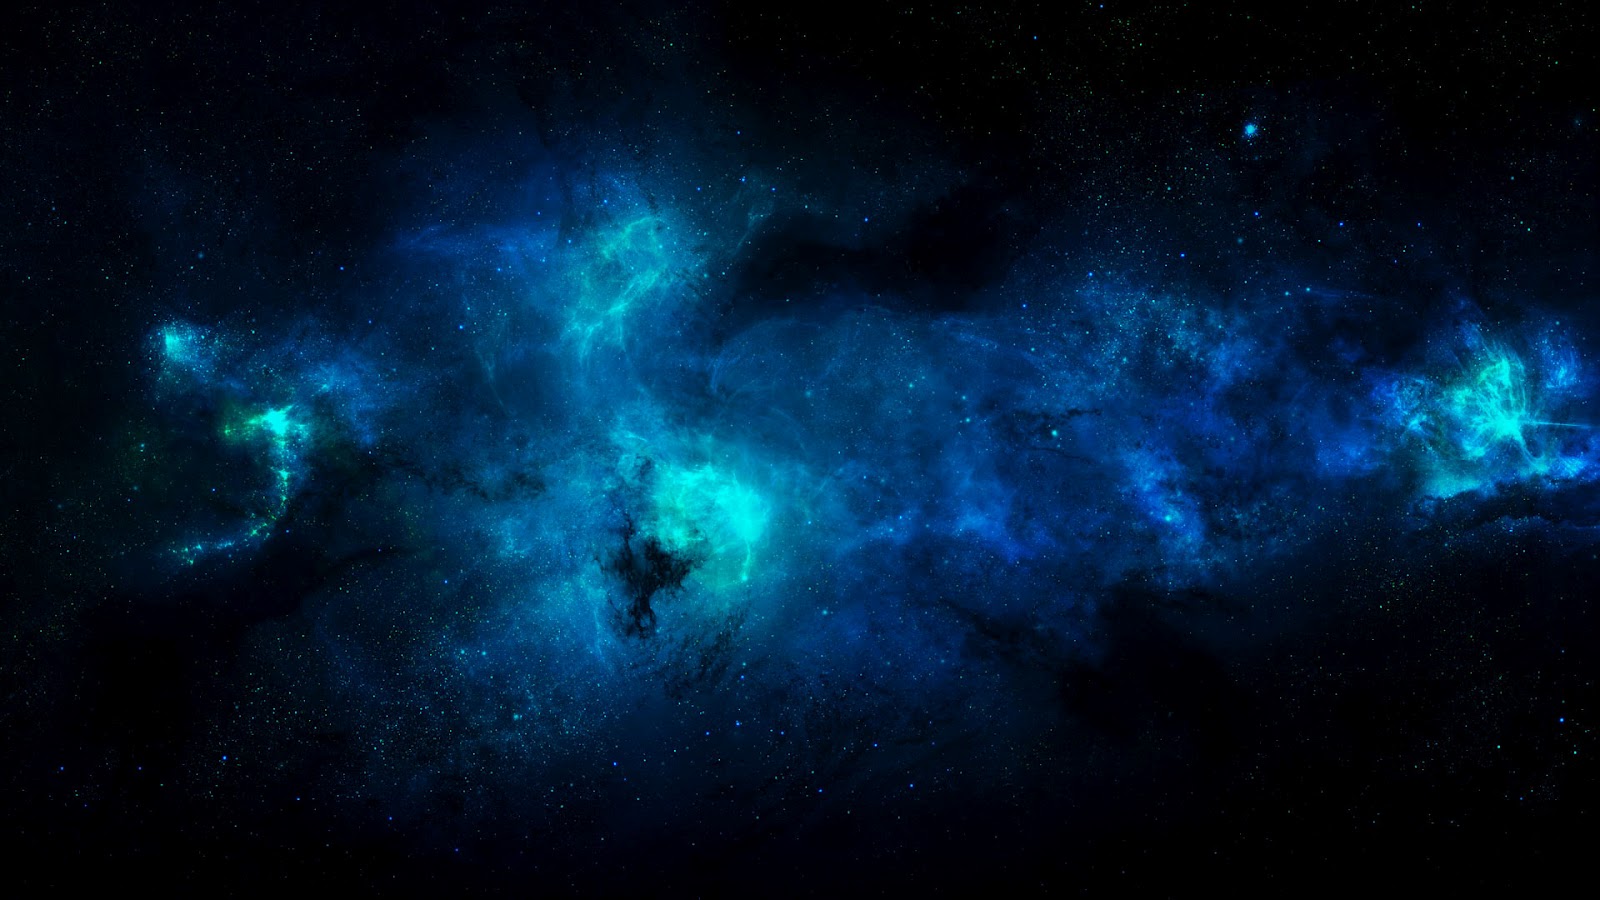 http://4.bp.blogspot.com/-exI7TkK9zC8/T6pABo55DOI/AAAAAAAAASo/I810MoqsRfc/s1600/cosmic+dust+nebulae+stars+wallpaper.jpg